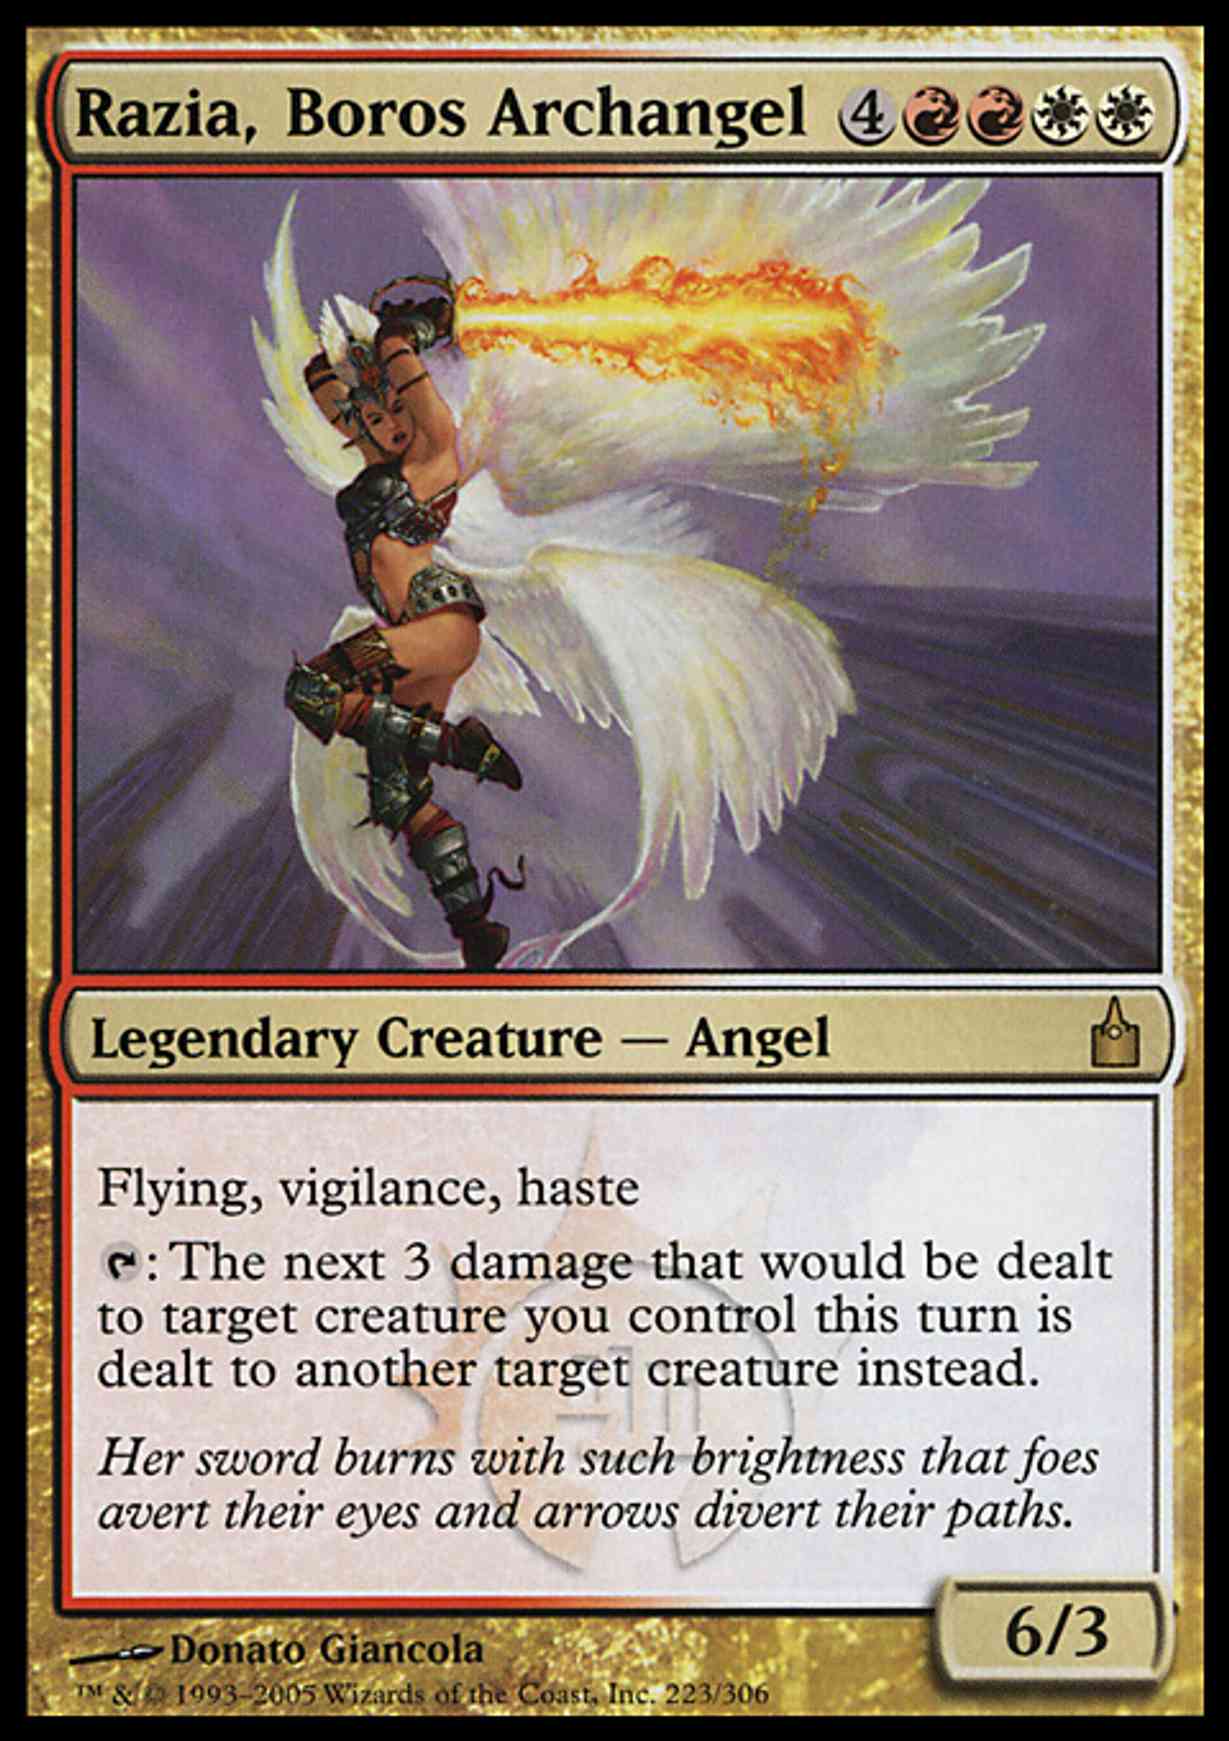 Razia, Boros Archangel magic card front